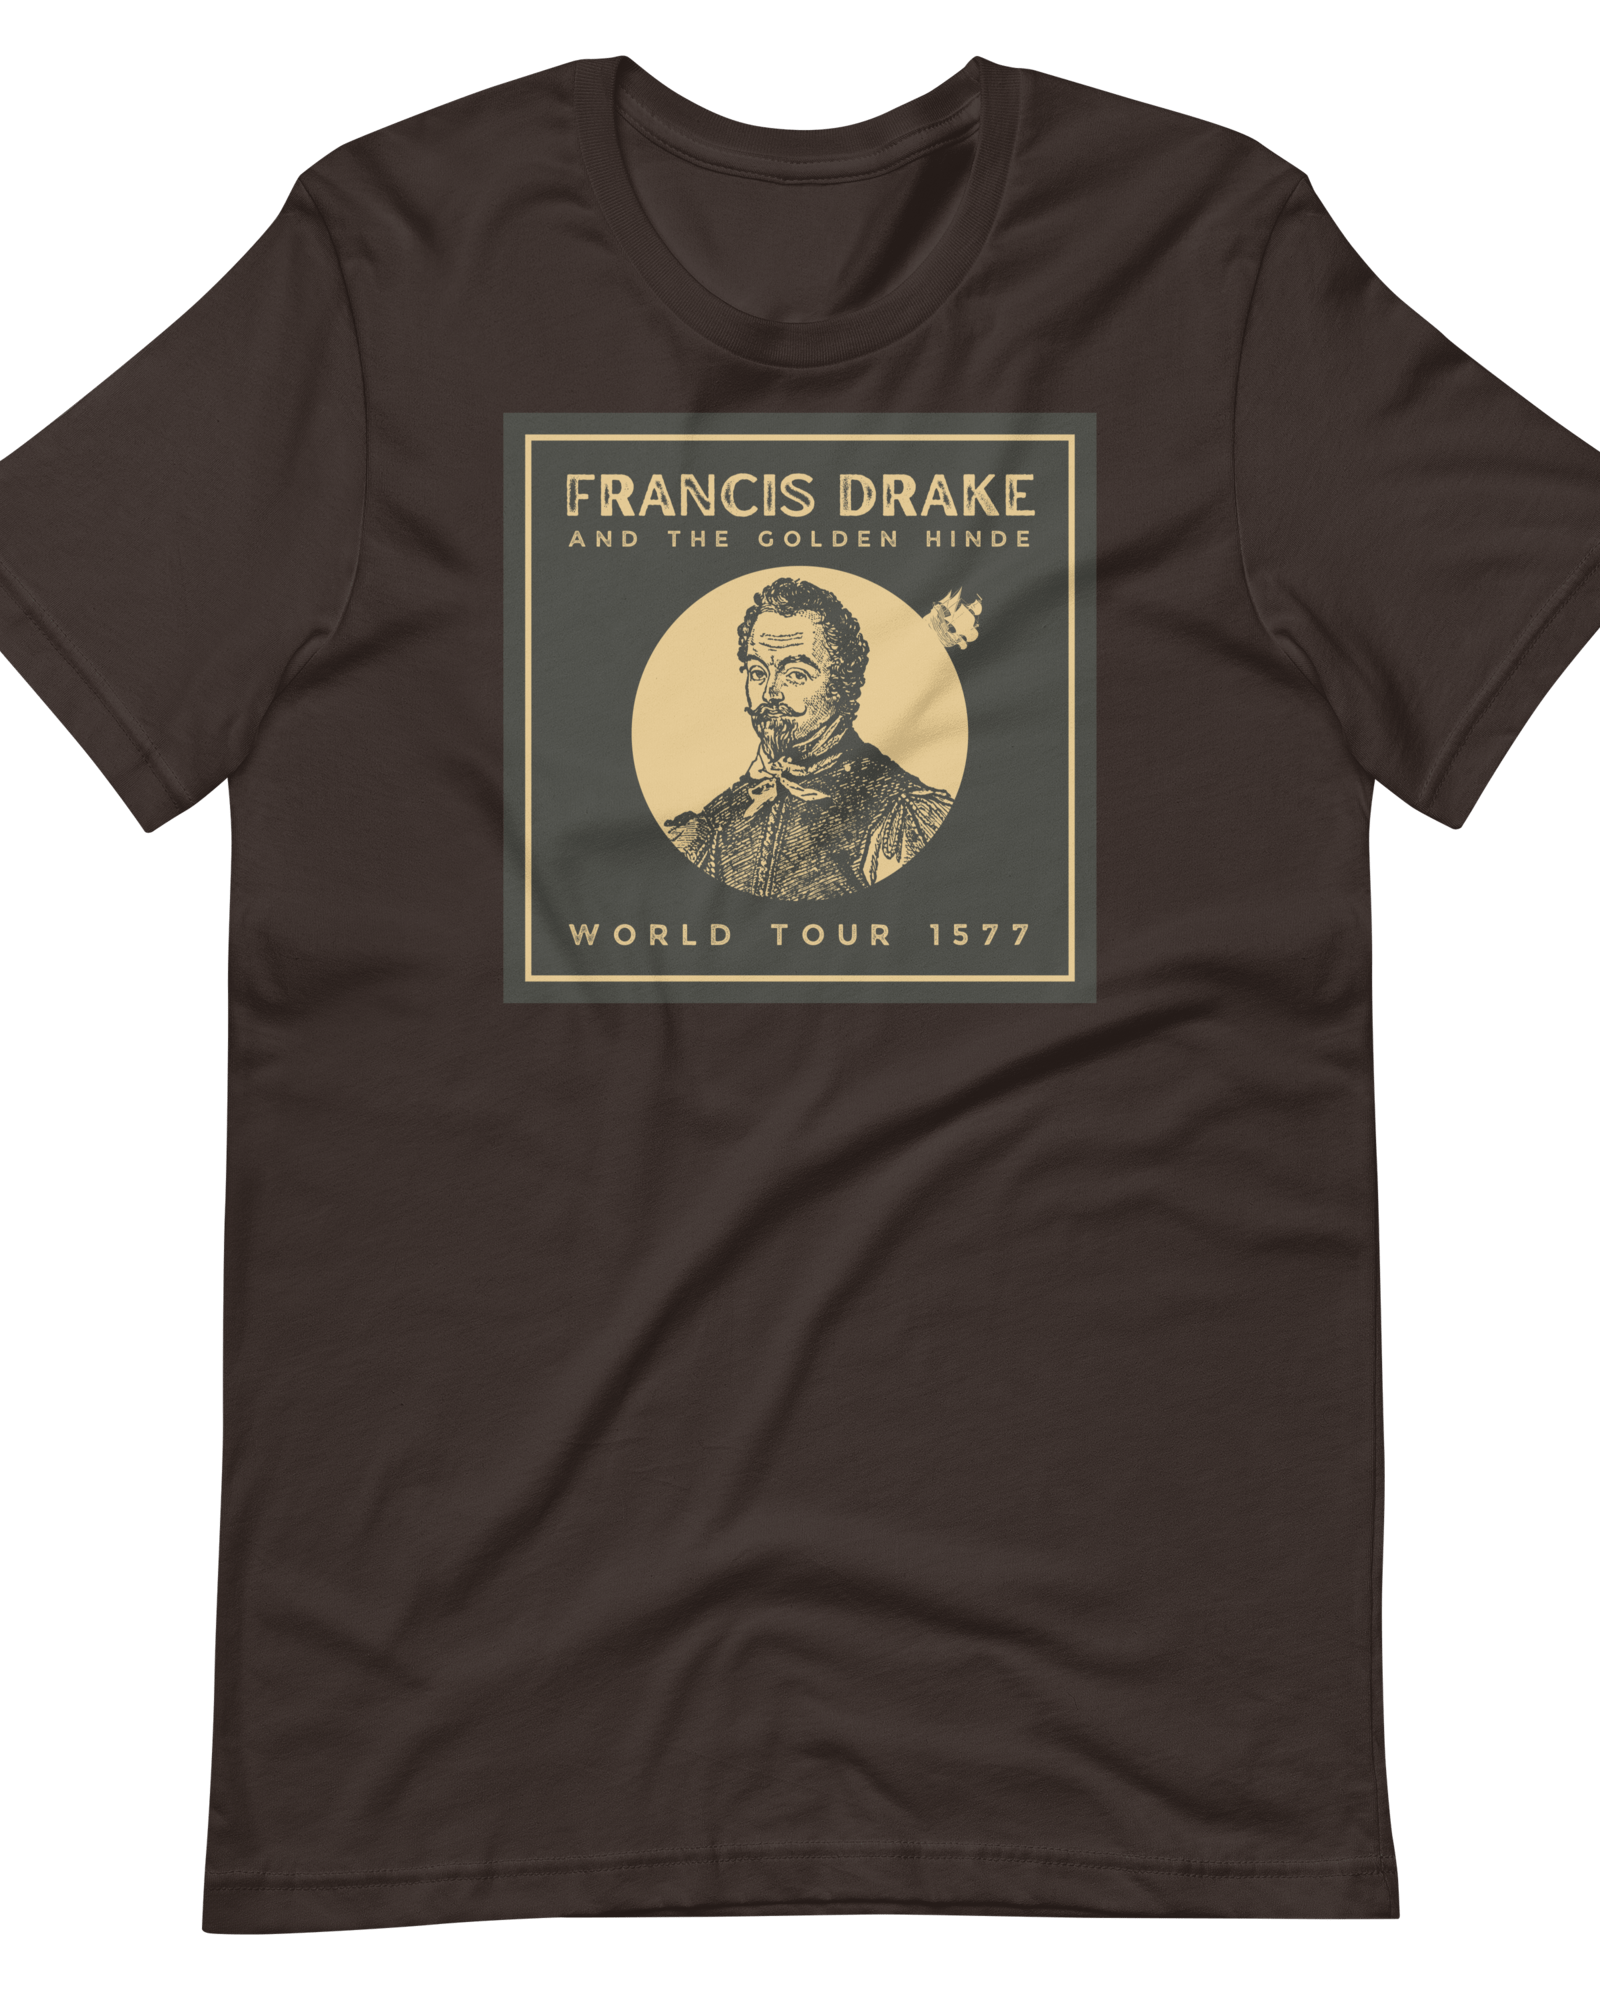 Francis Drake and The Golden Hinde World Tour T-shirt Brown / S Shirts & Tops Jolly & Goode